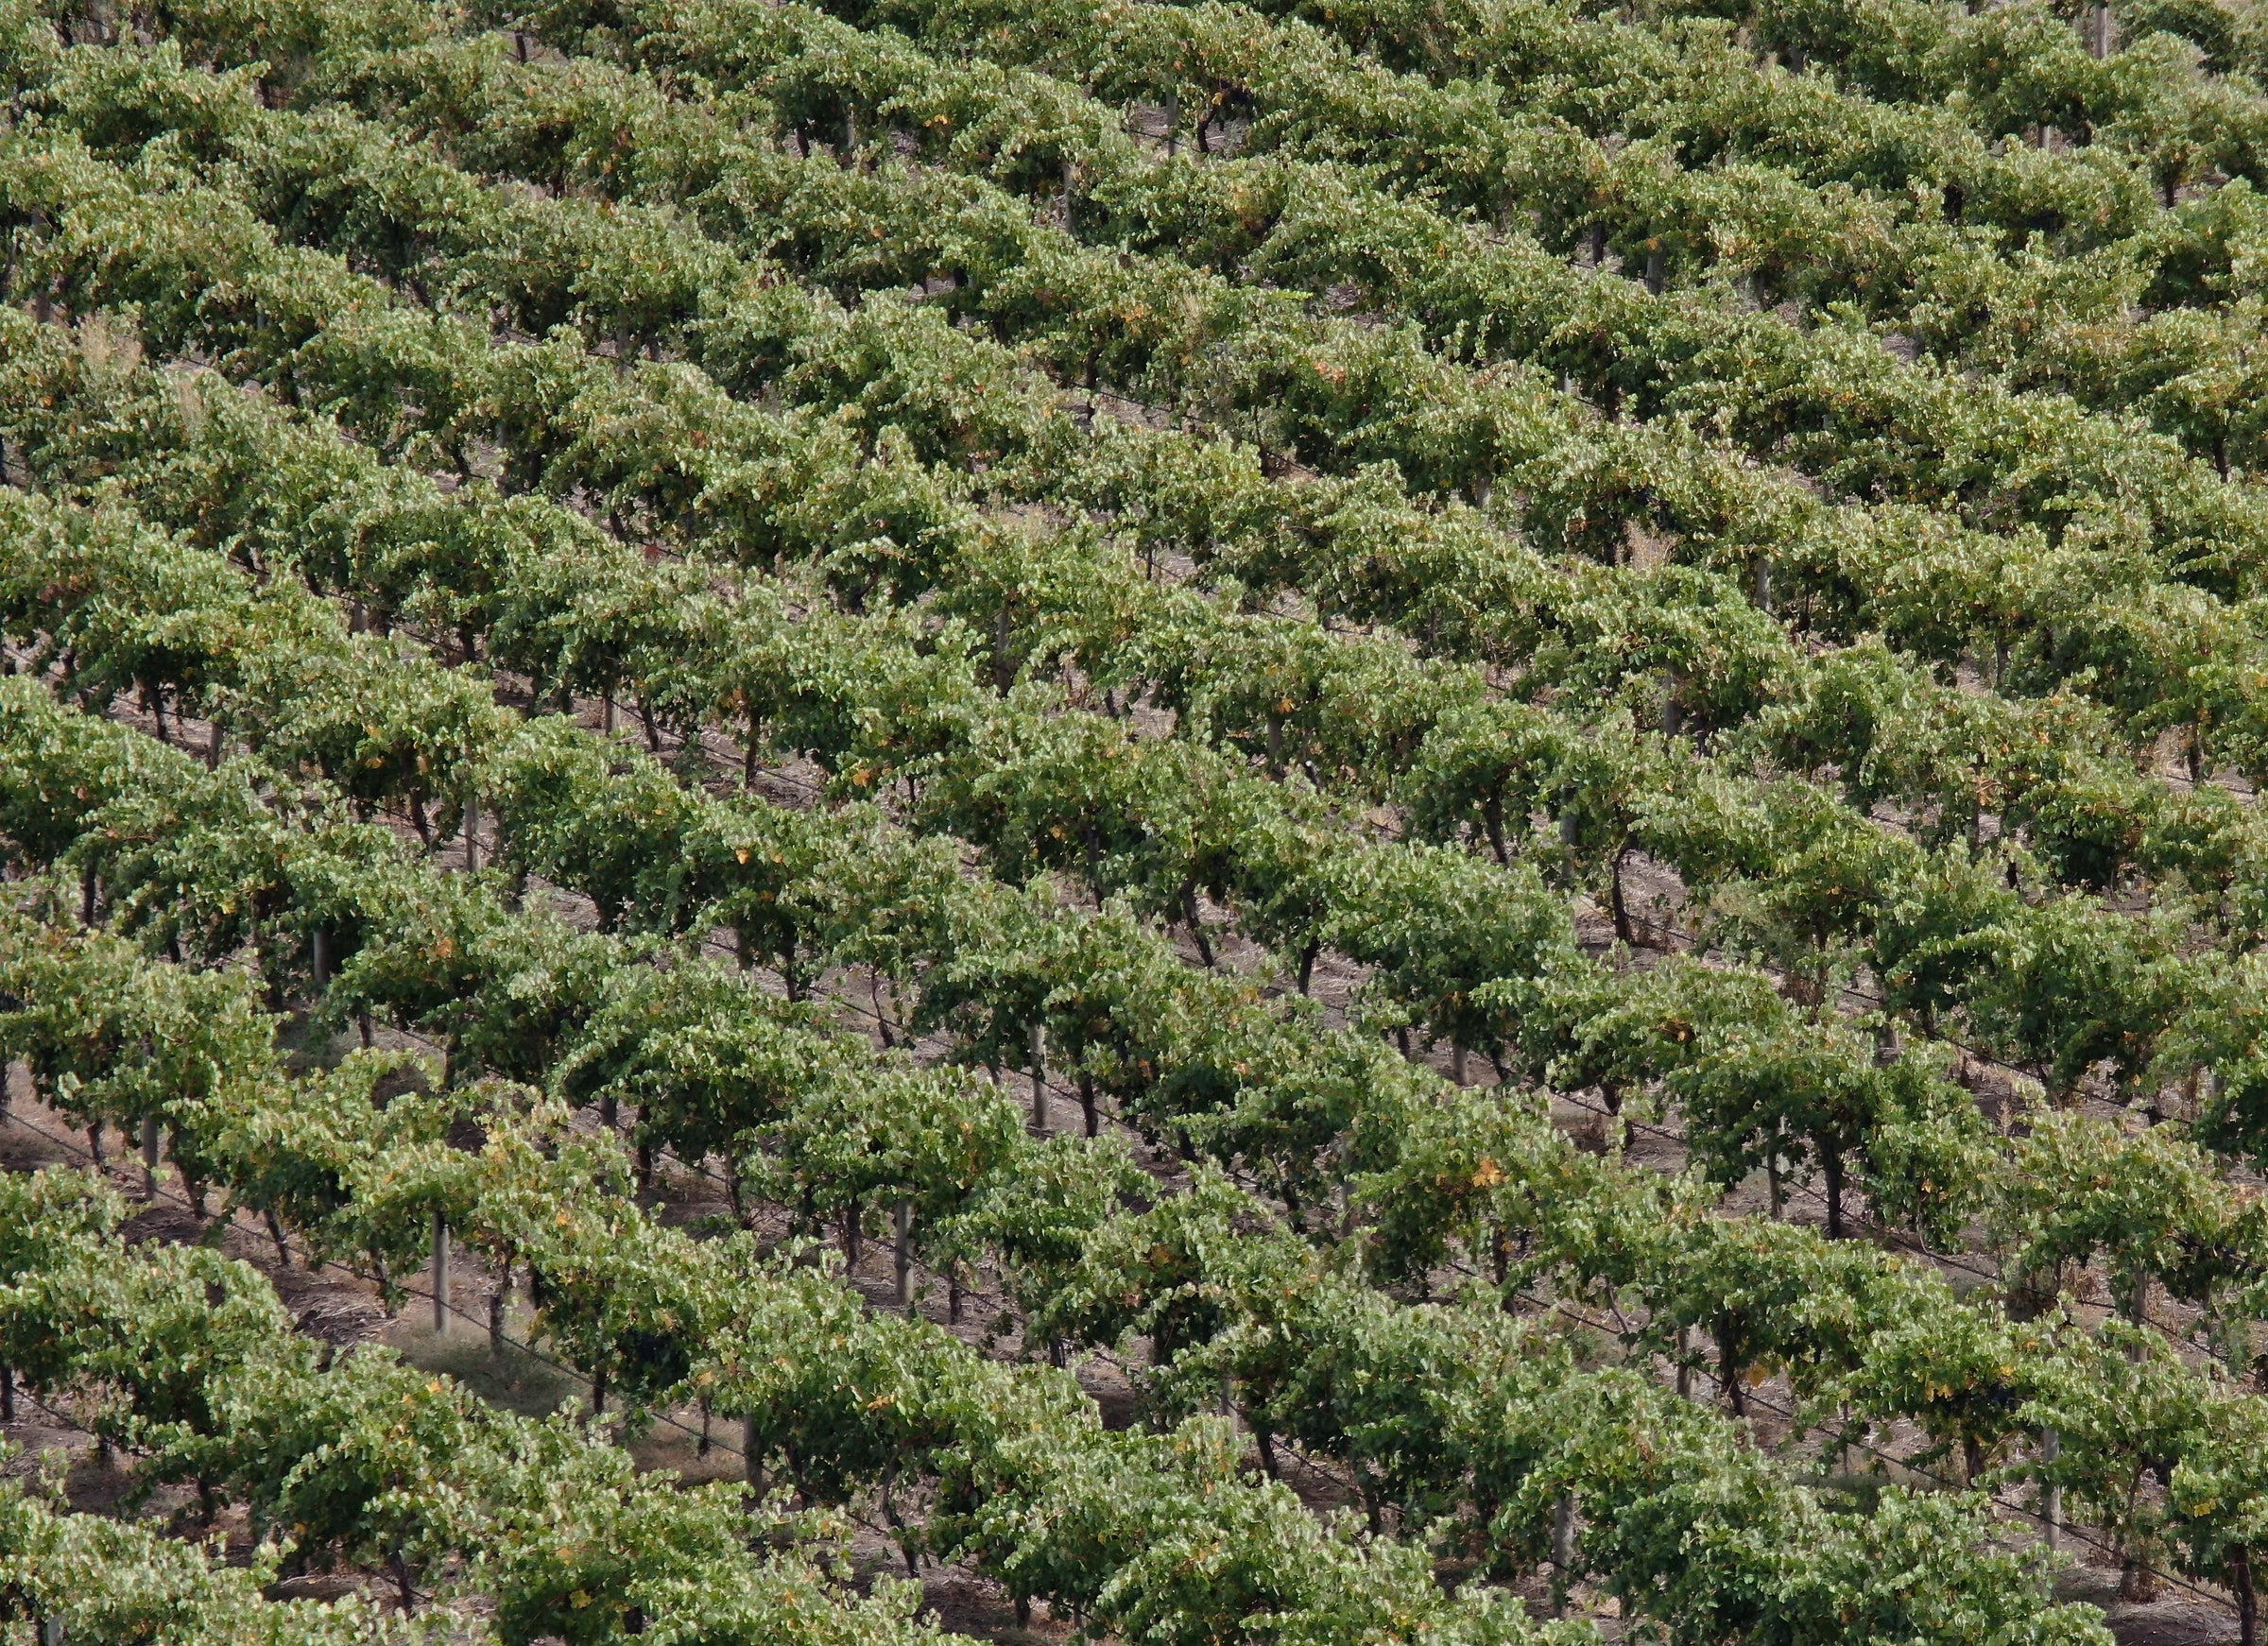 Single vineyard of shiraz vines in Bethany, Barossa Valley